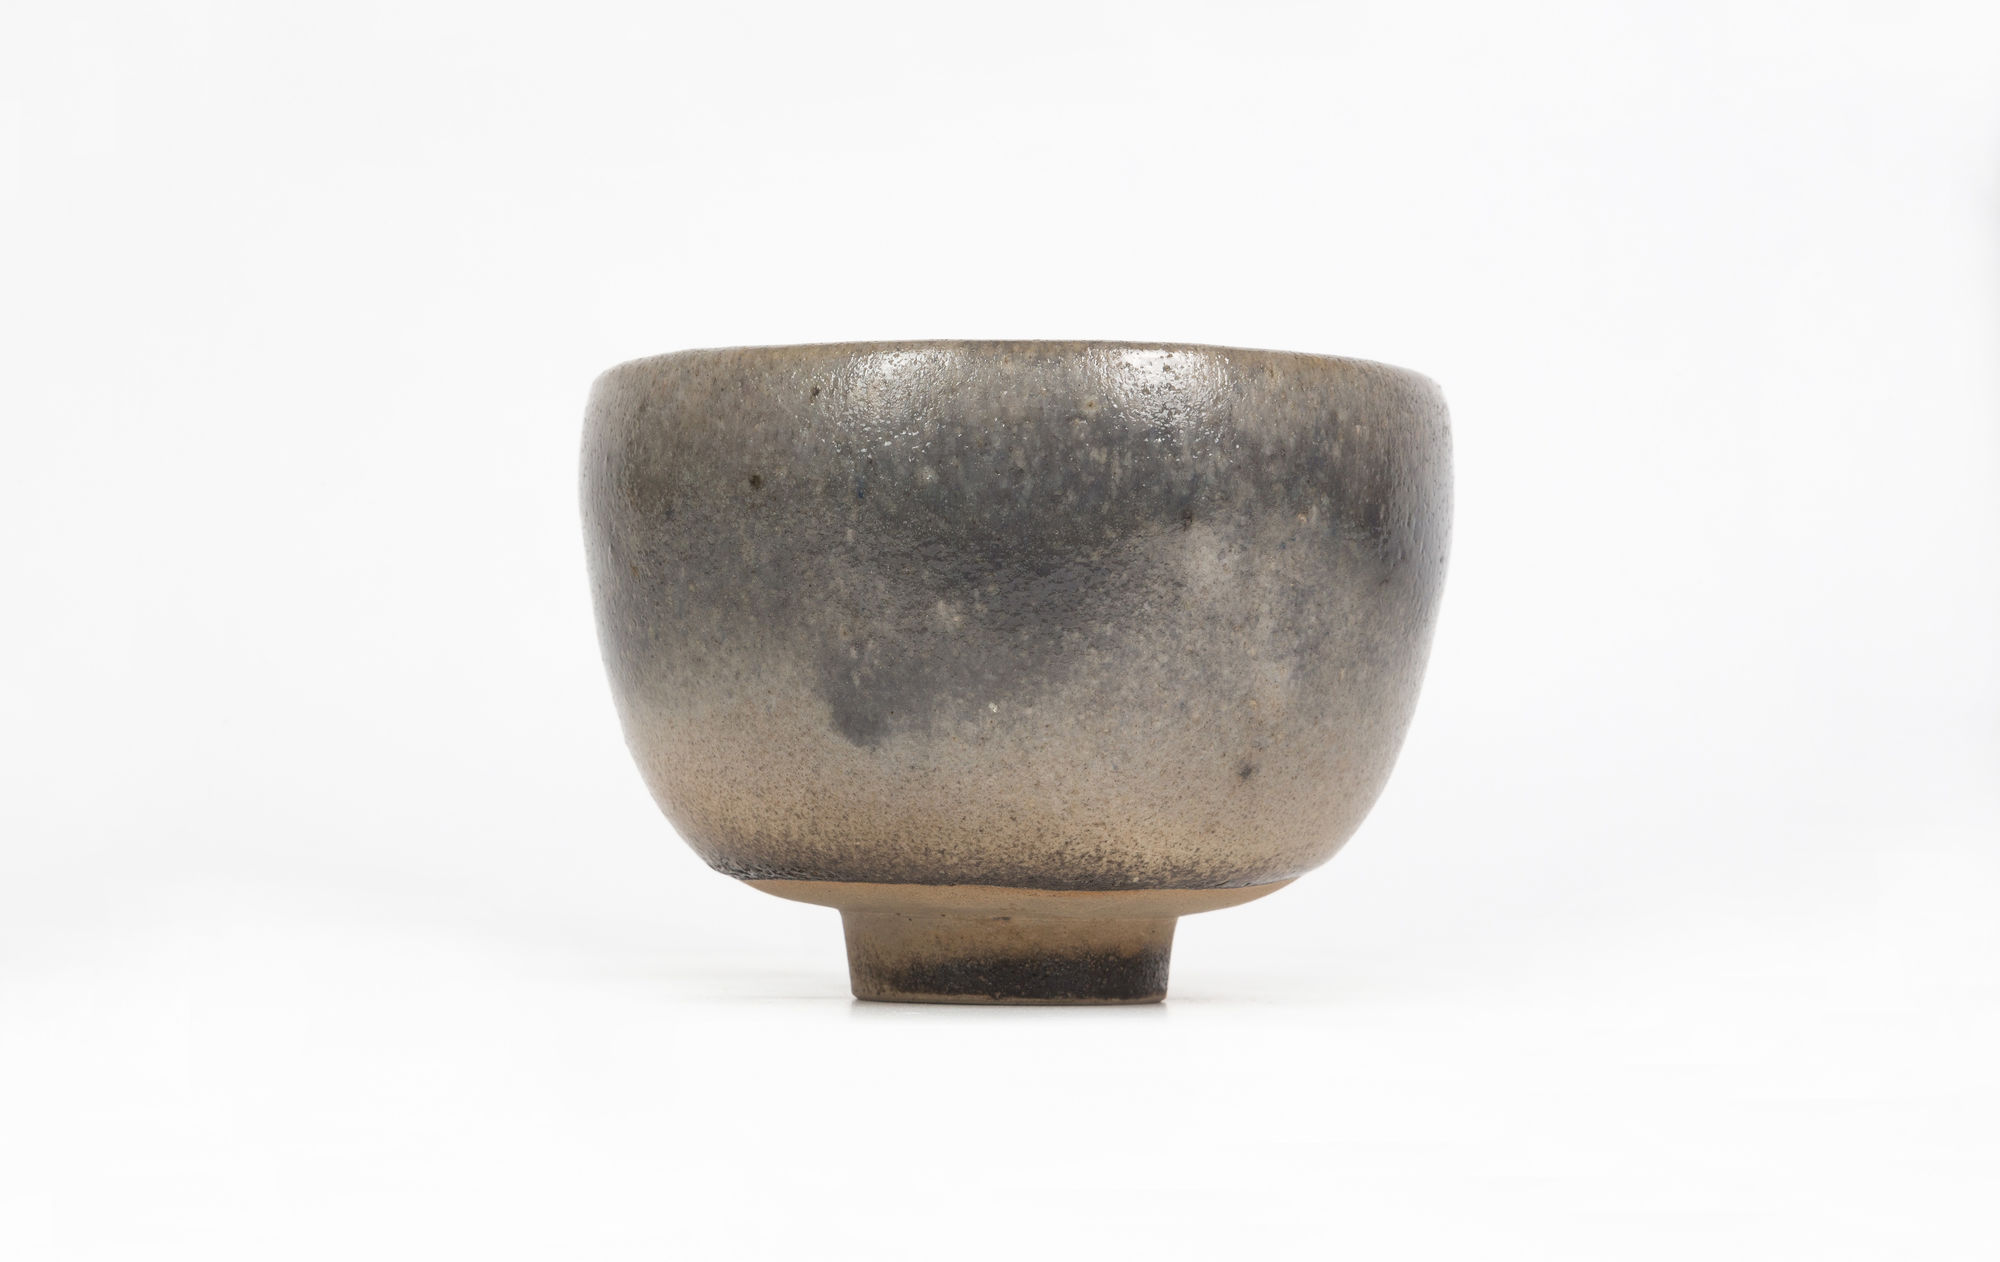 Mario Mascarin ceramic bowl